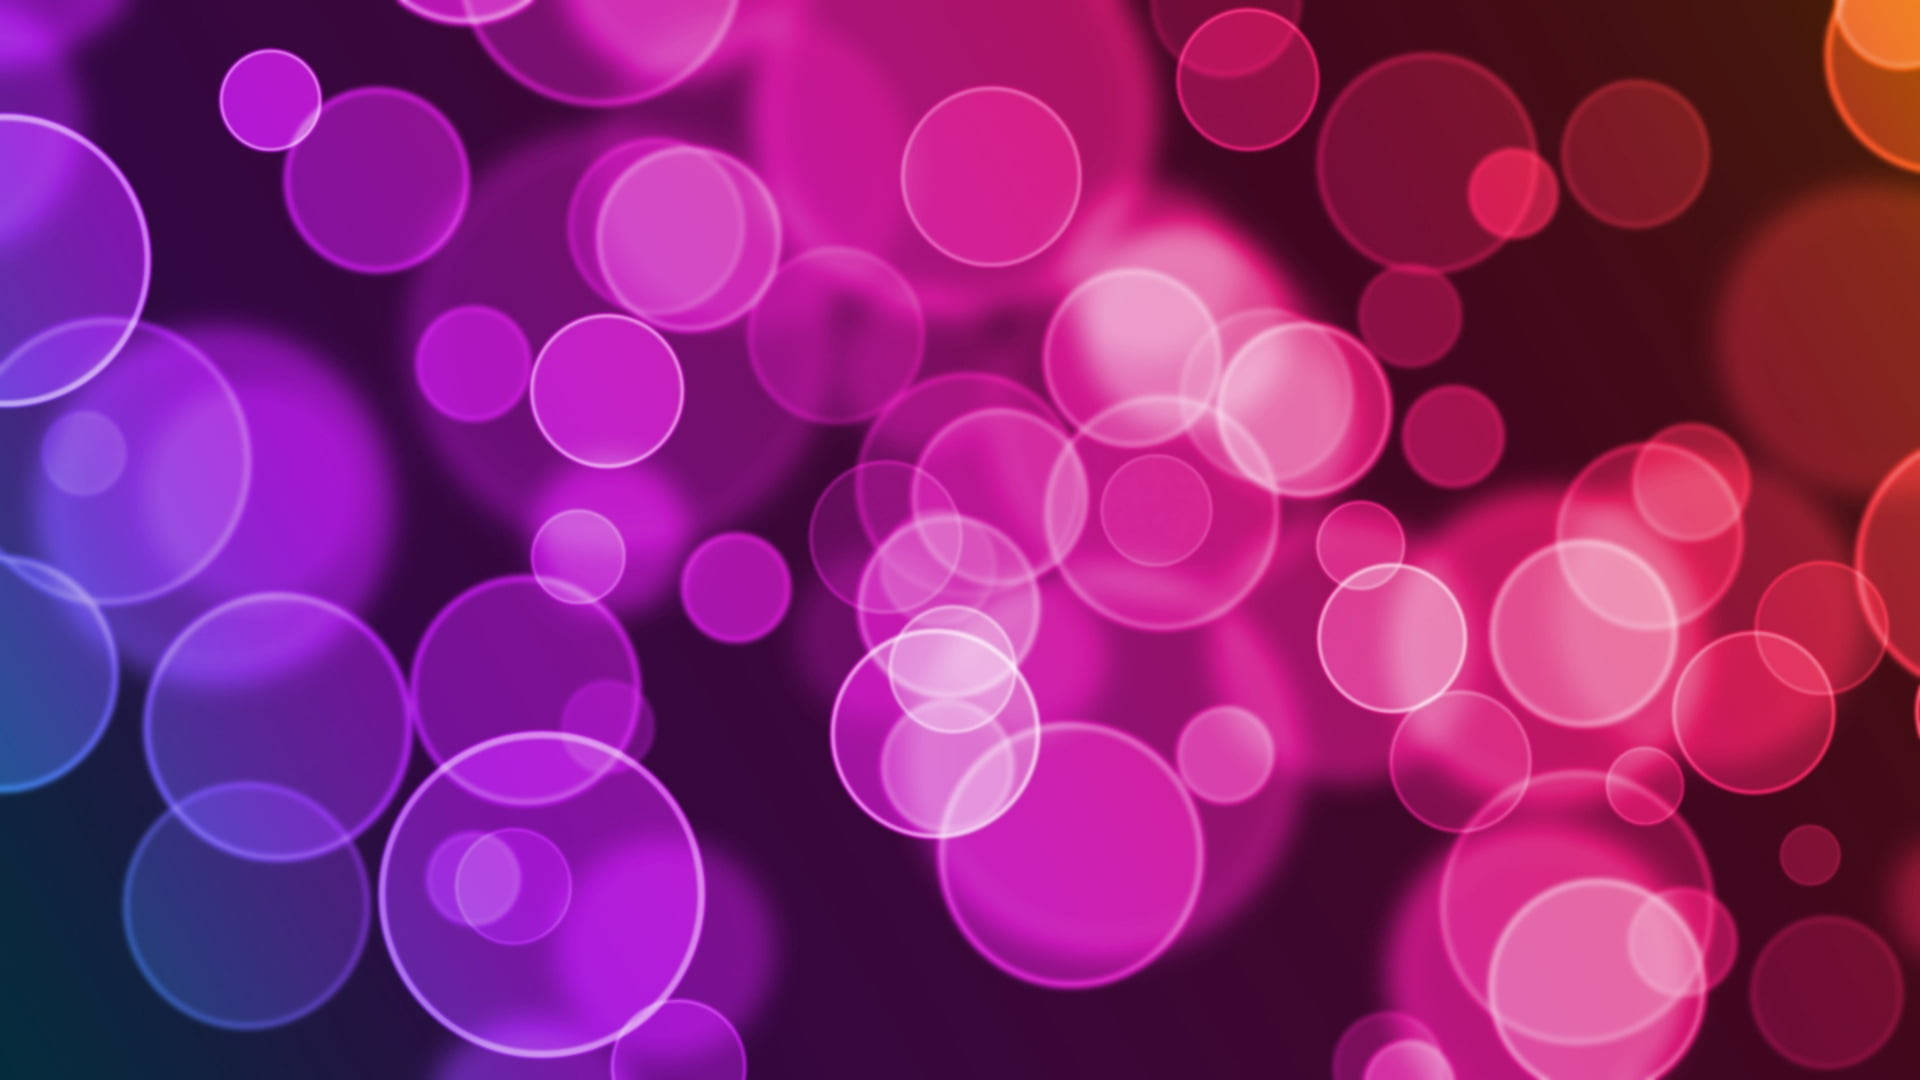 Blurry Pink Circular Sparkles Wallpaper